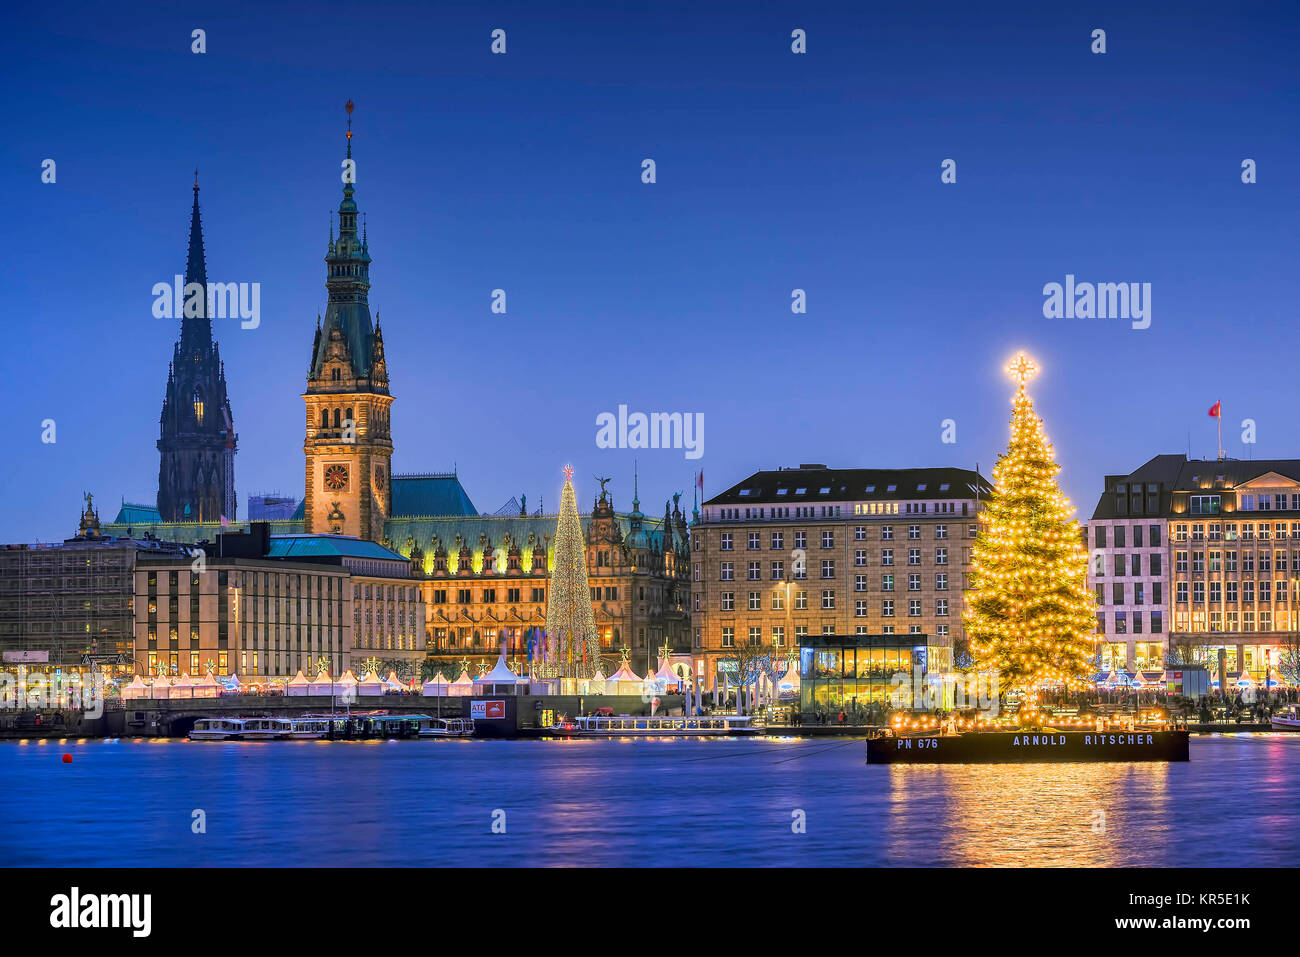 Alster abeto al tiempo de Navidad en el Alster en Hamburgo, Alemania, Europa, Alstertanne zur Weihnachtszeit auf der en Hamburgo Binnenalster, Deut. Foto de stock